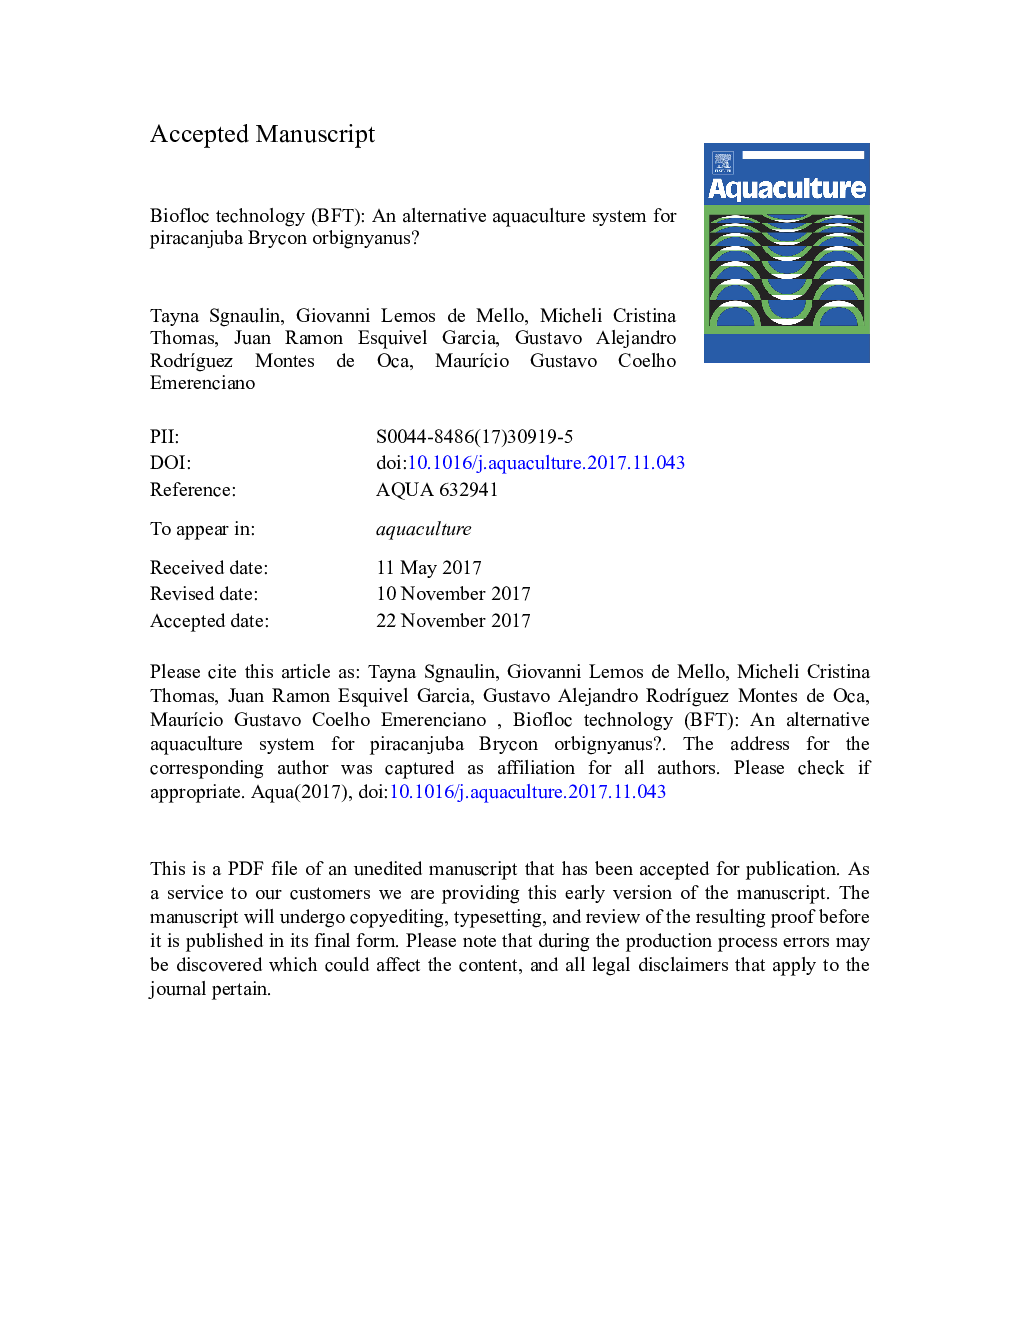 Biofloc technology (BFT): An alternative aquaculture system for piracanjuba Brycon orbignyanus?